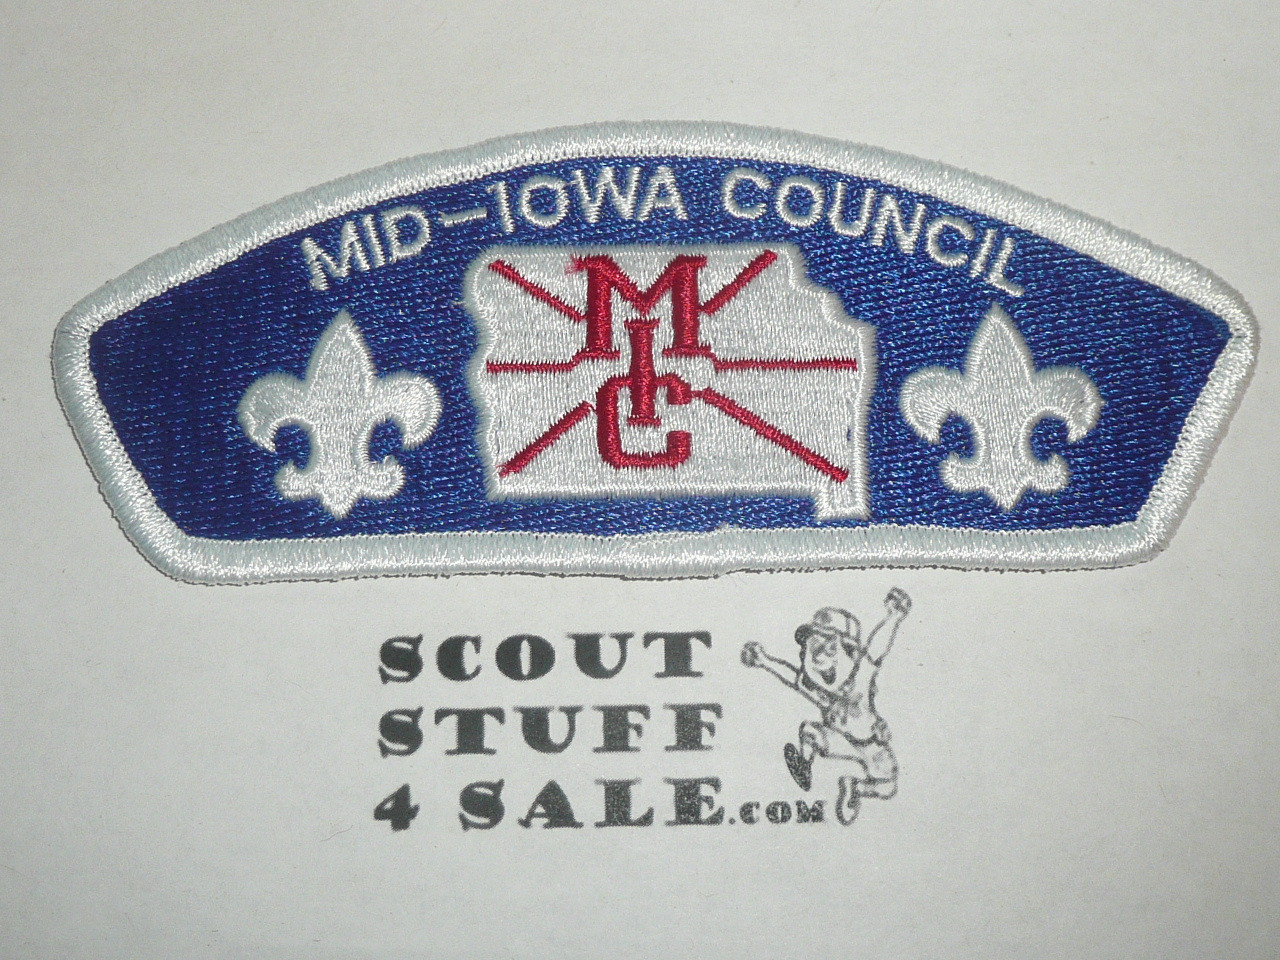 Mid-Iowa Council s2b CSP - Scout